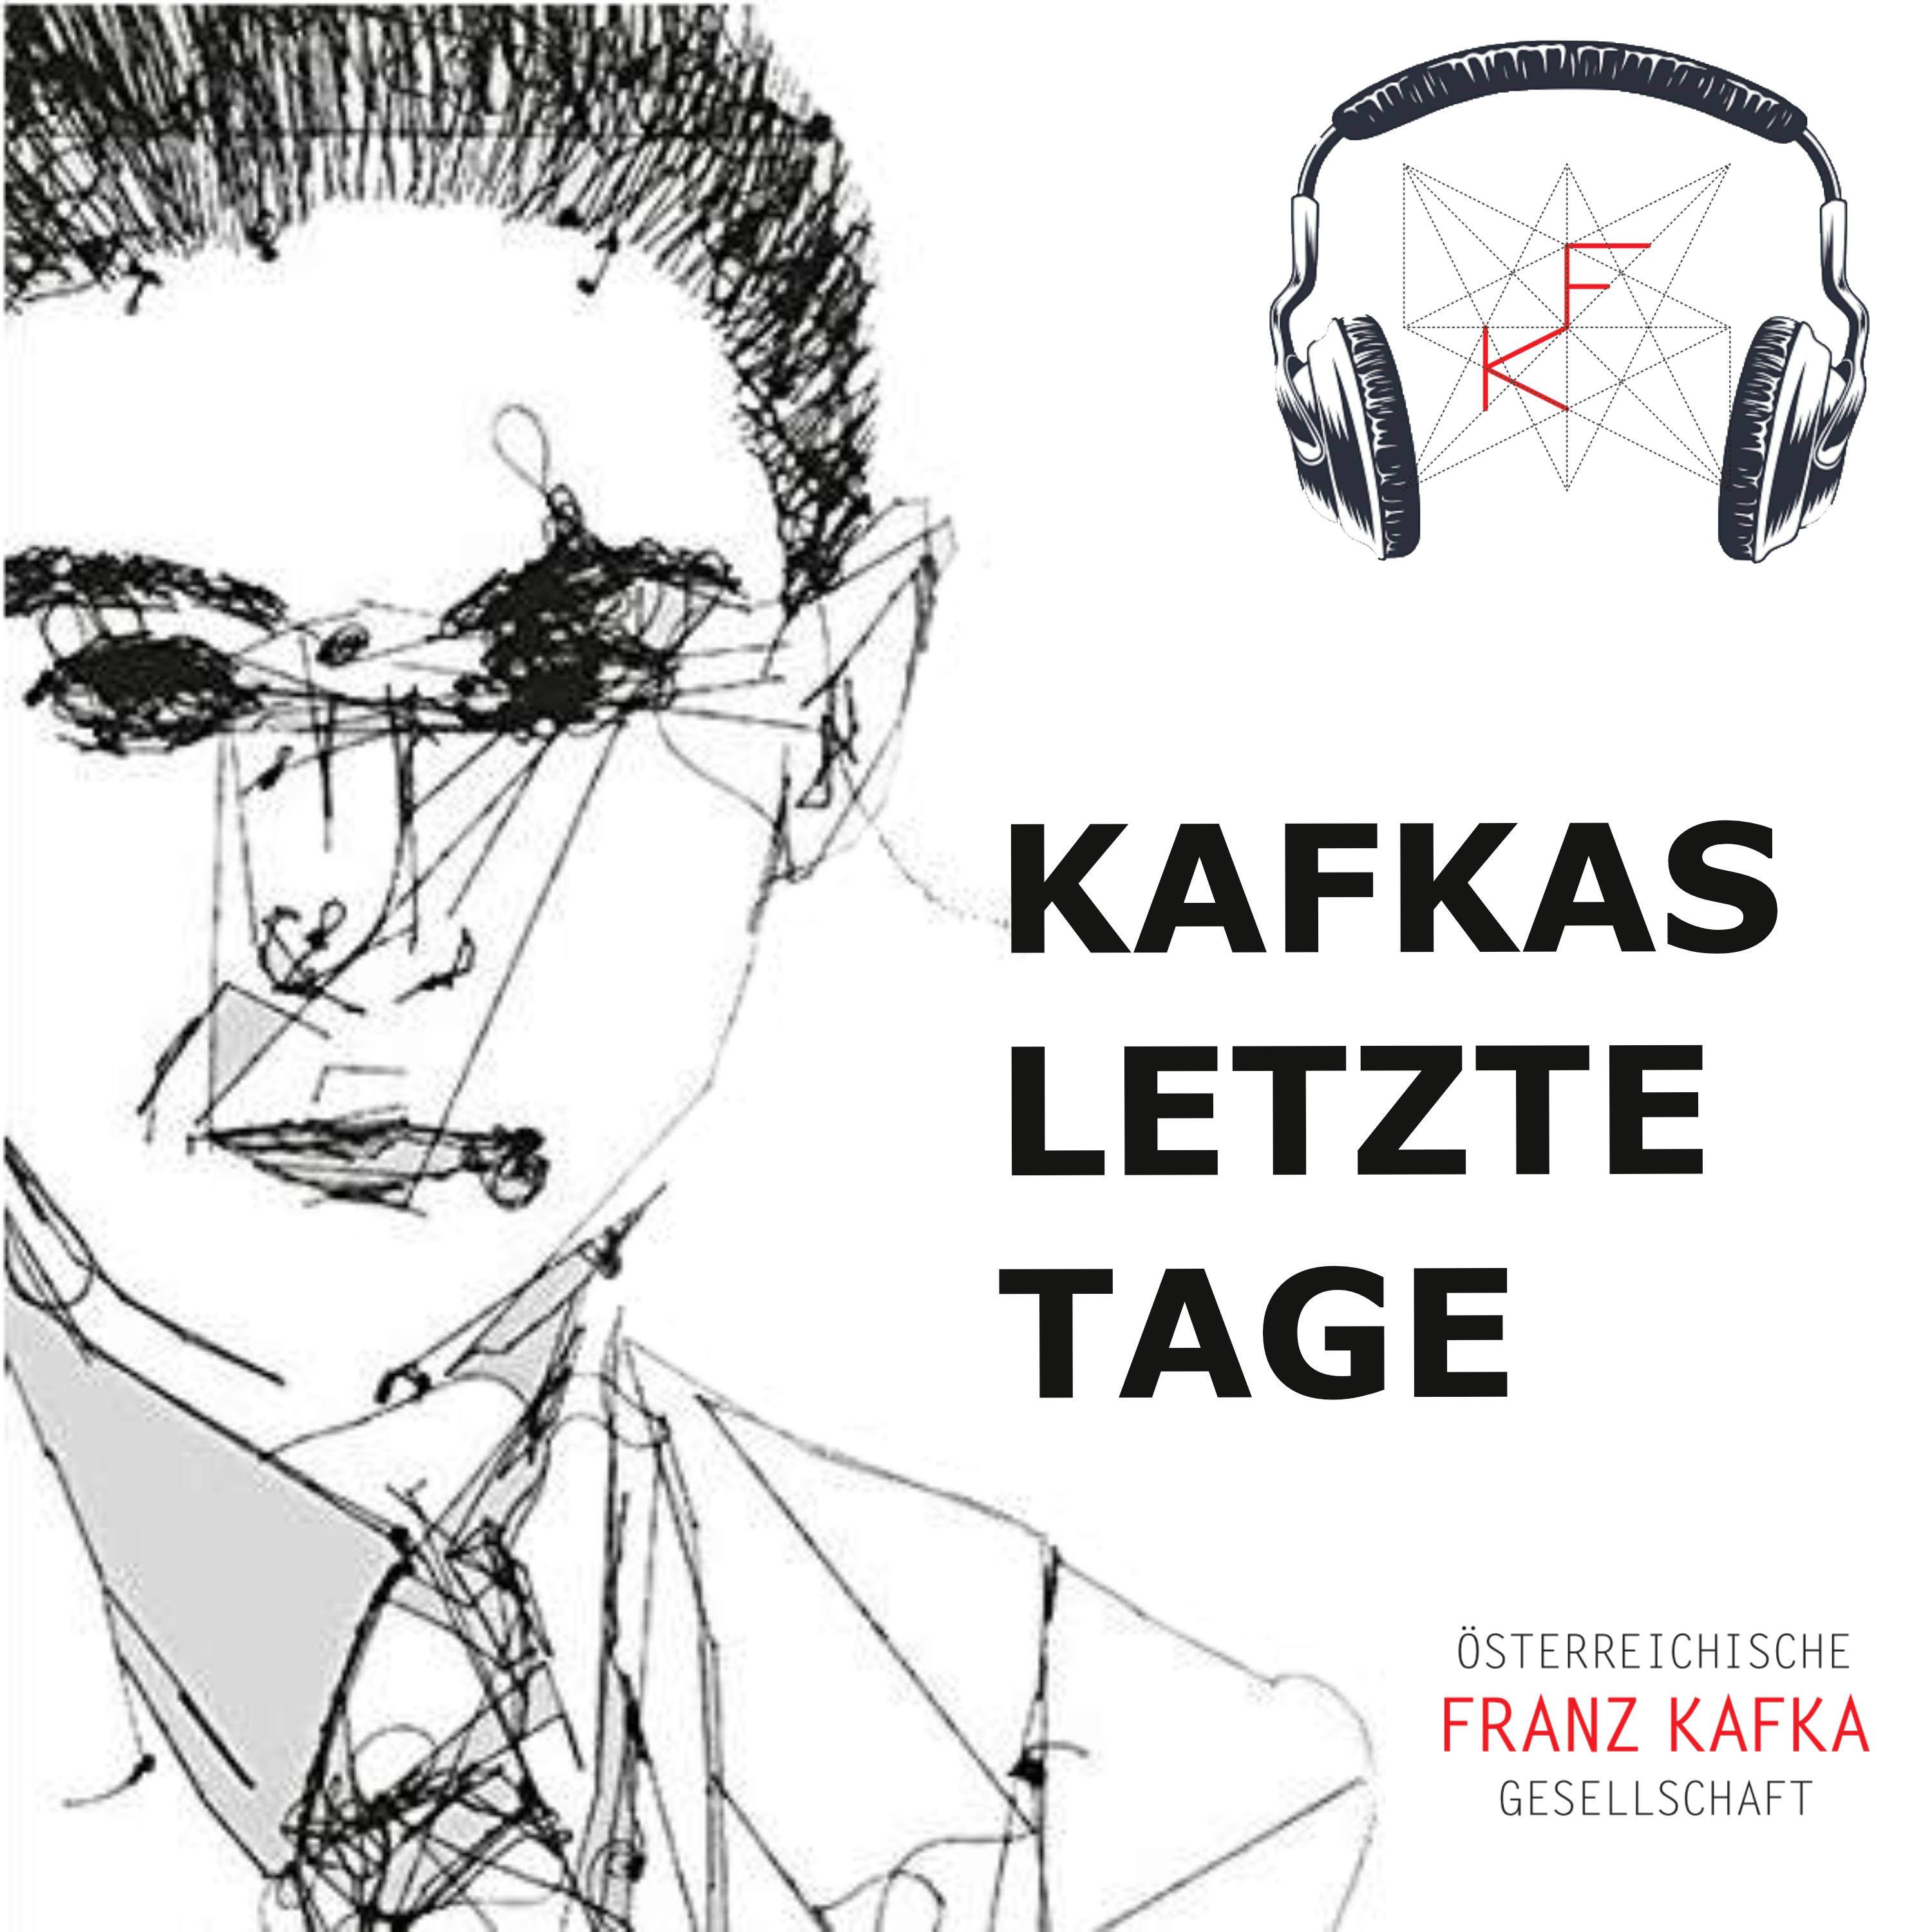 Sonntag, 27. April 1924 – Der Schriftsteller Franz Kafka